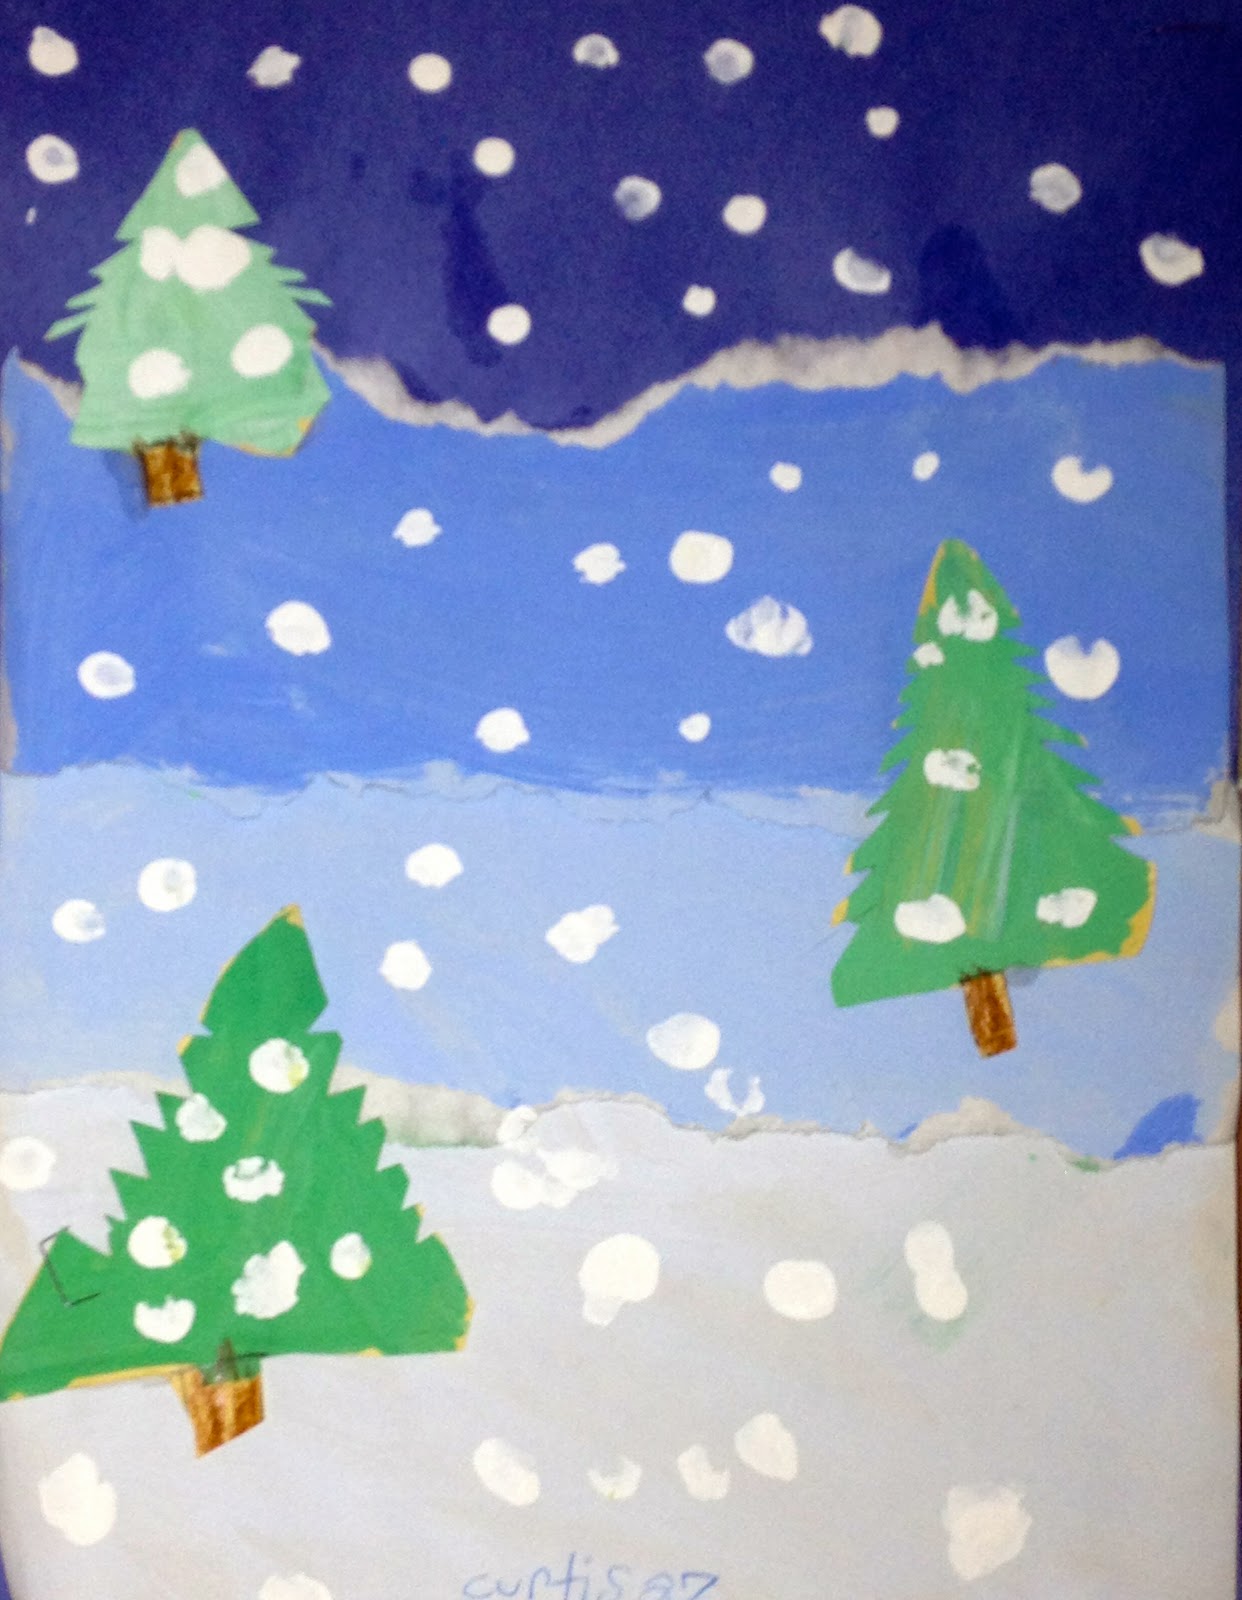 Art- It's Made To Be Seen: 2nd grade Winter Scene